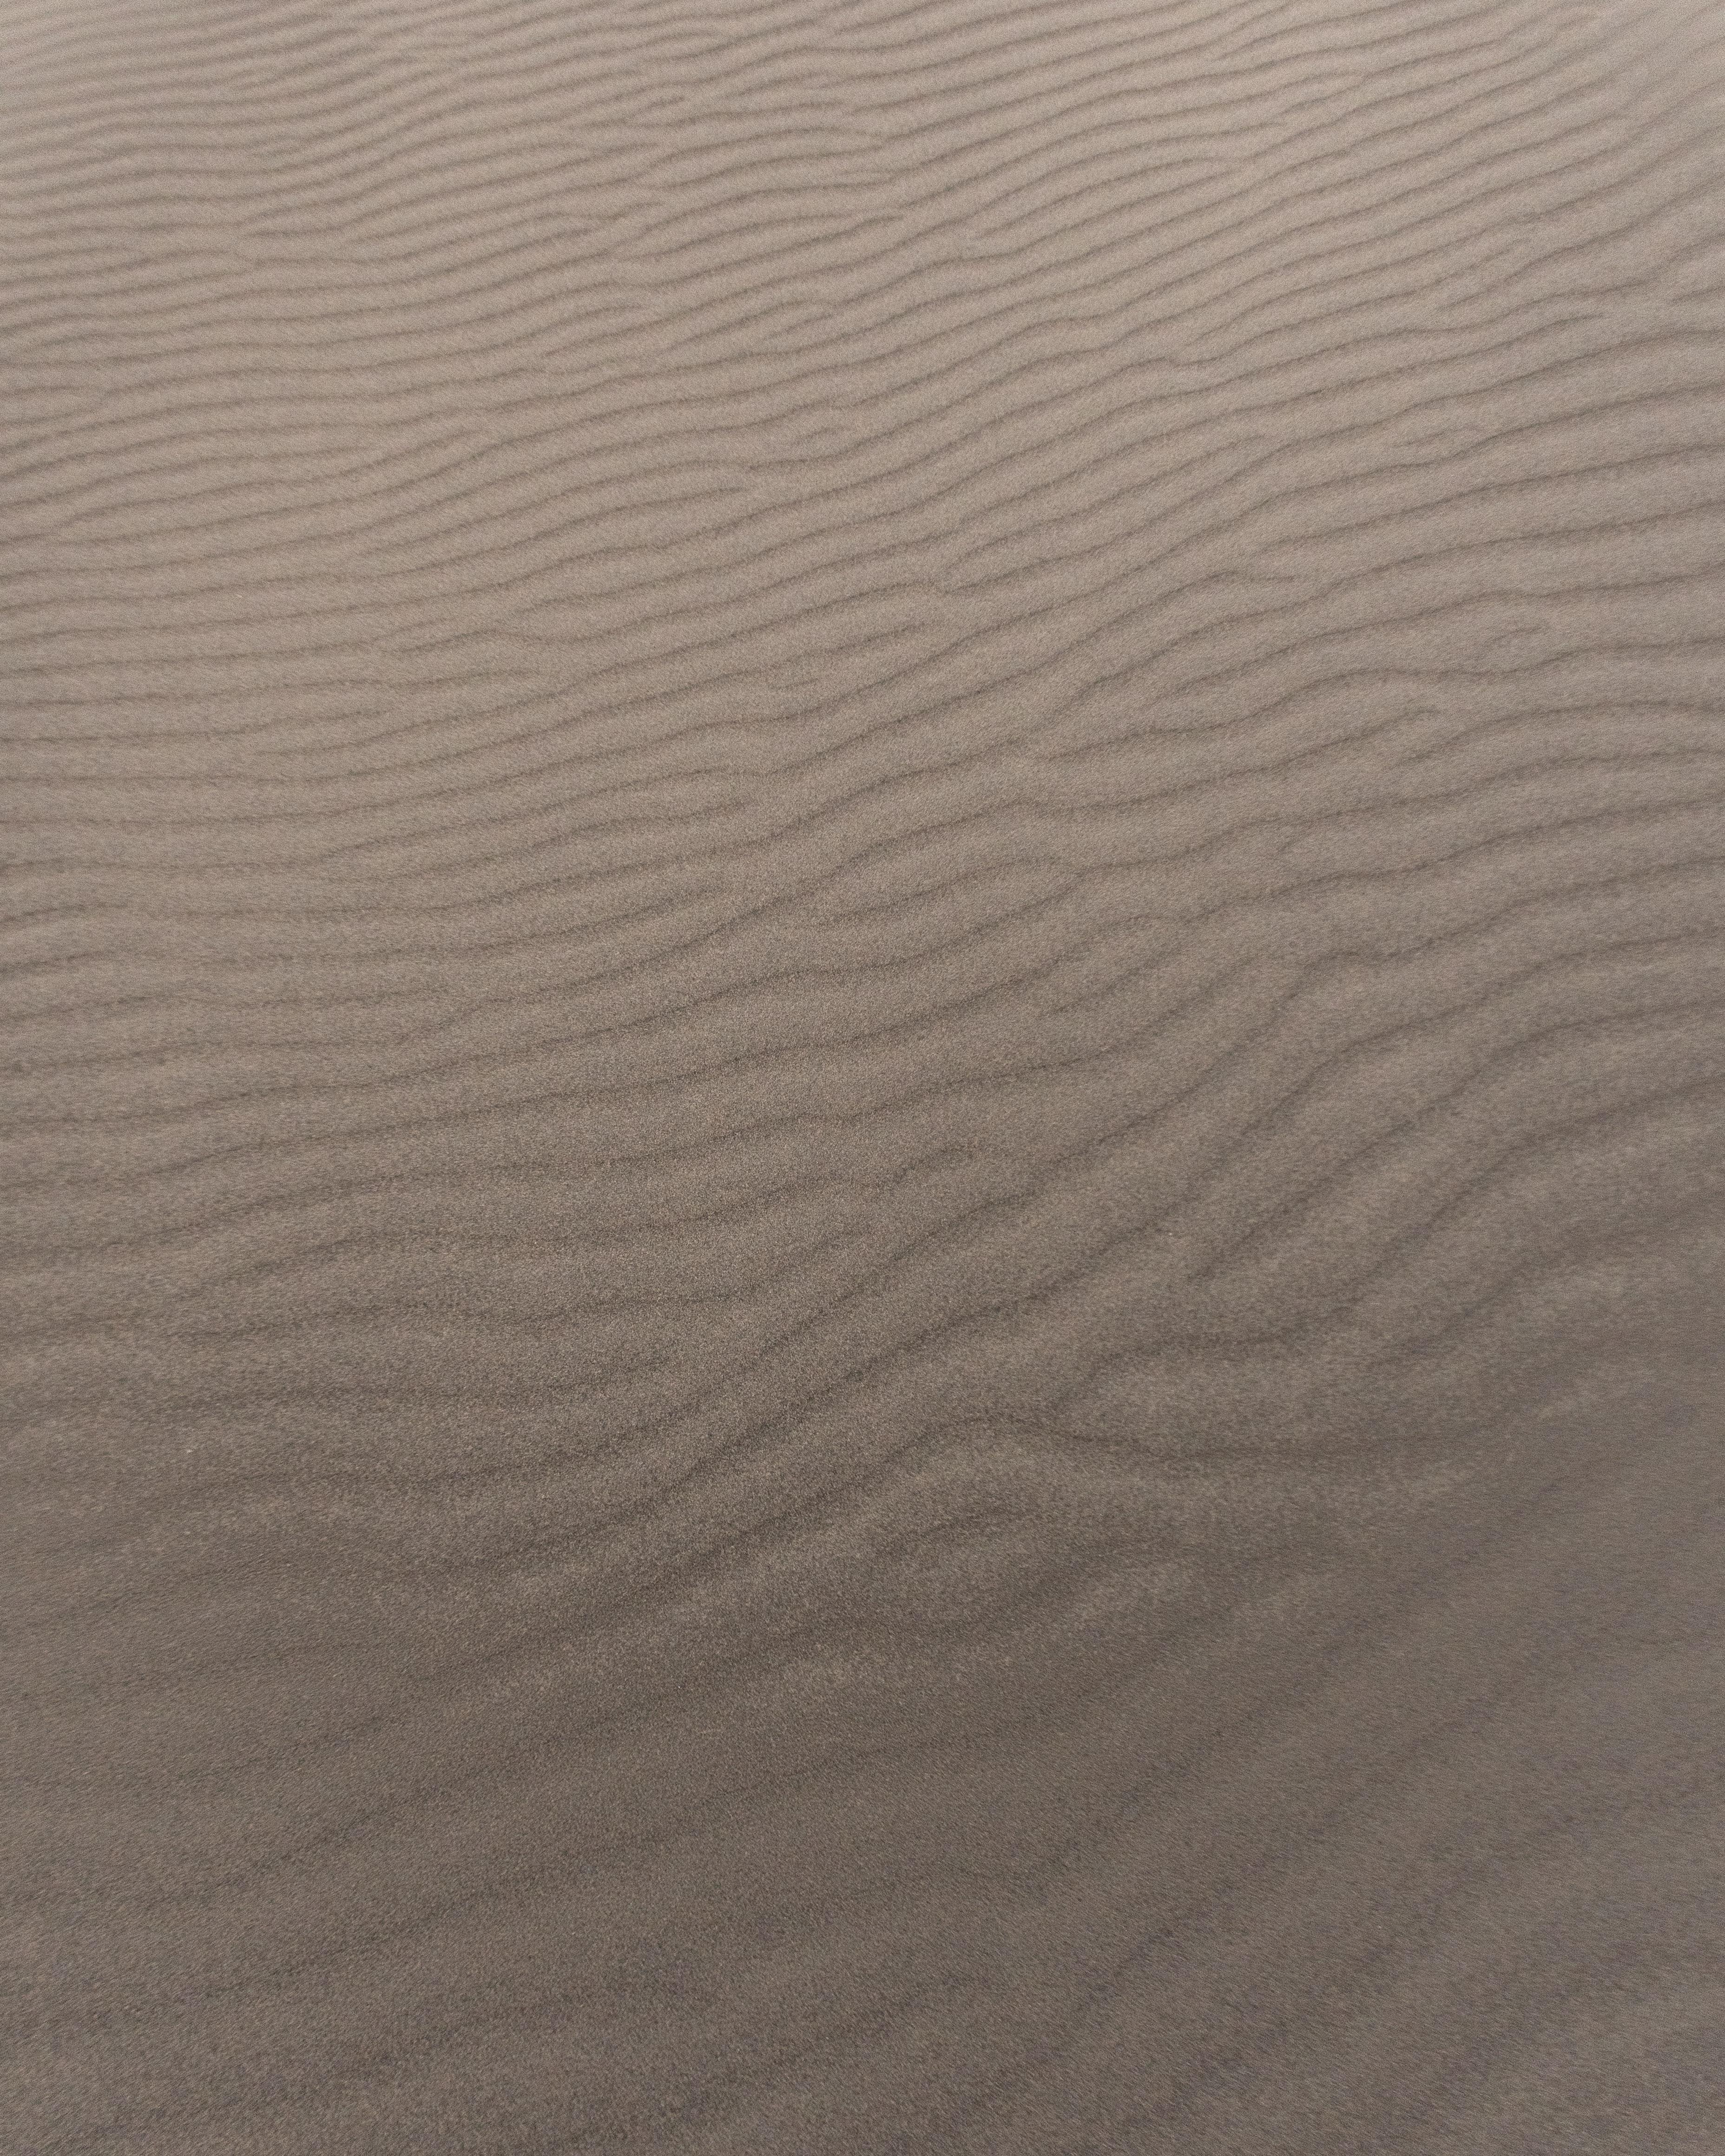 waves, sand, desert, texture, textures, stripes, streaks